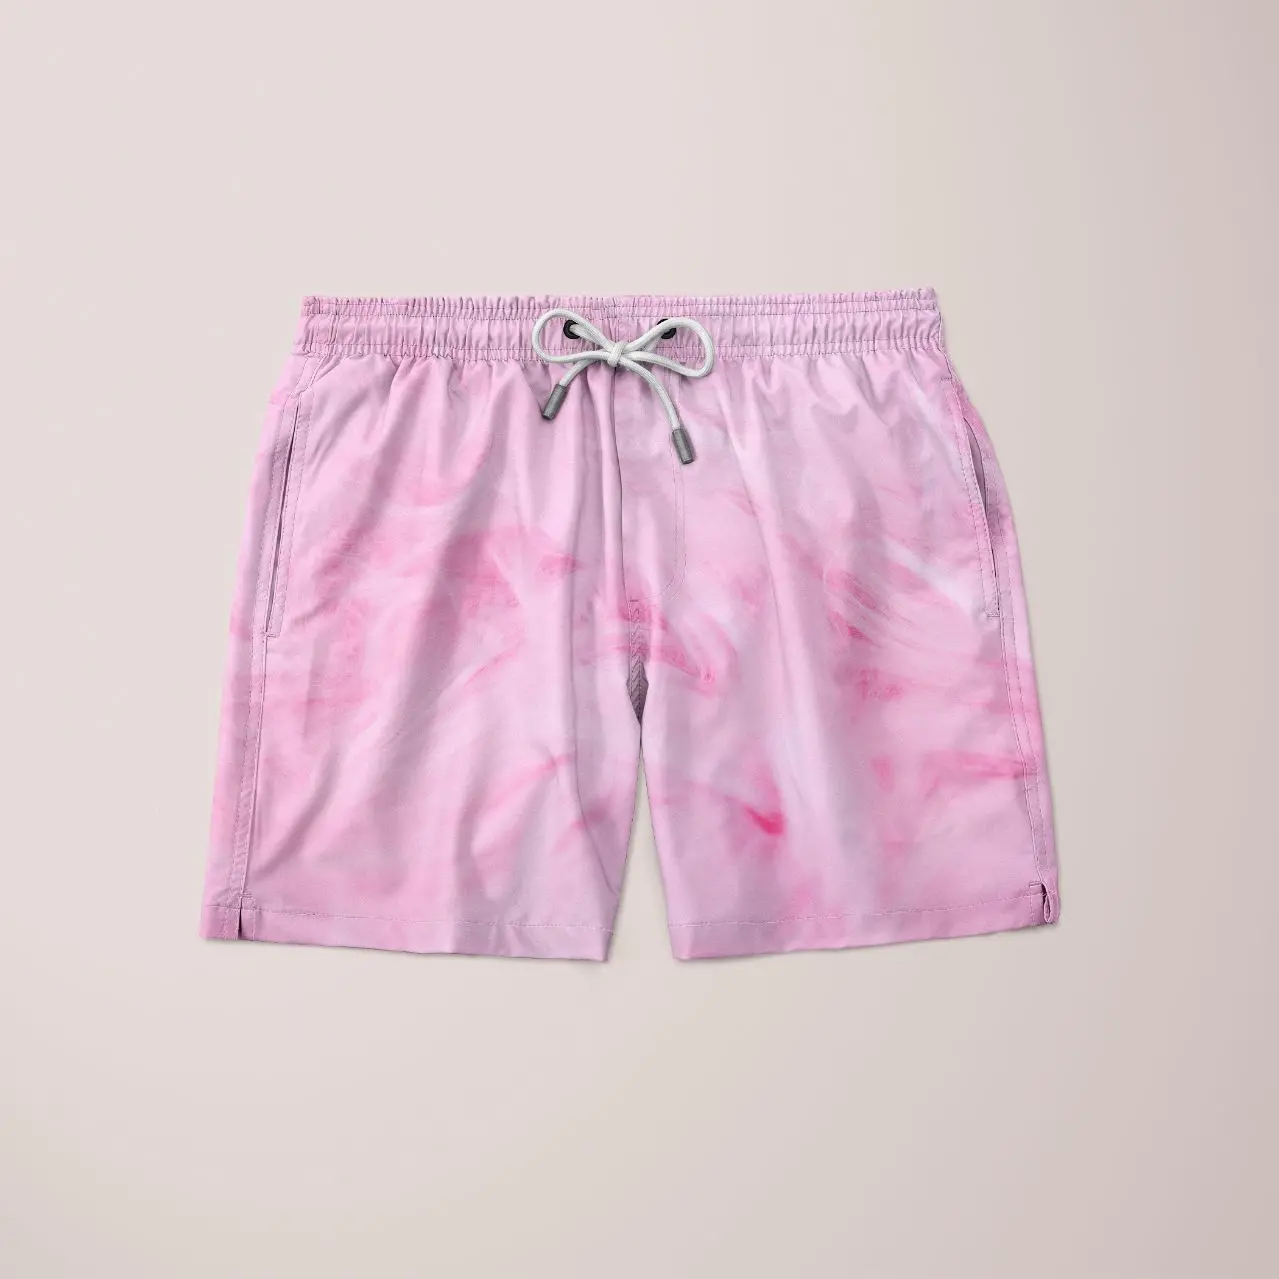 Quzuss Pink Shorts